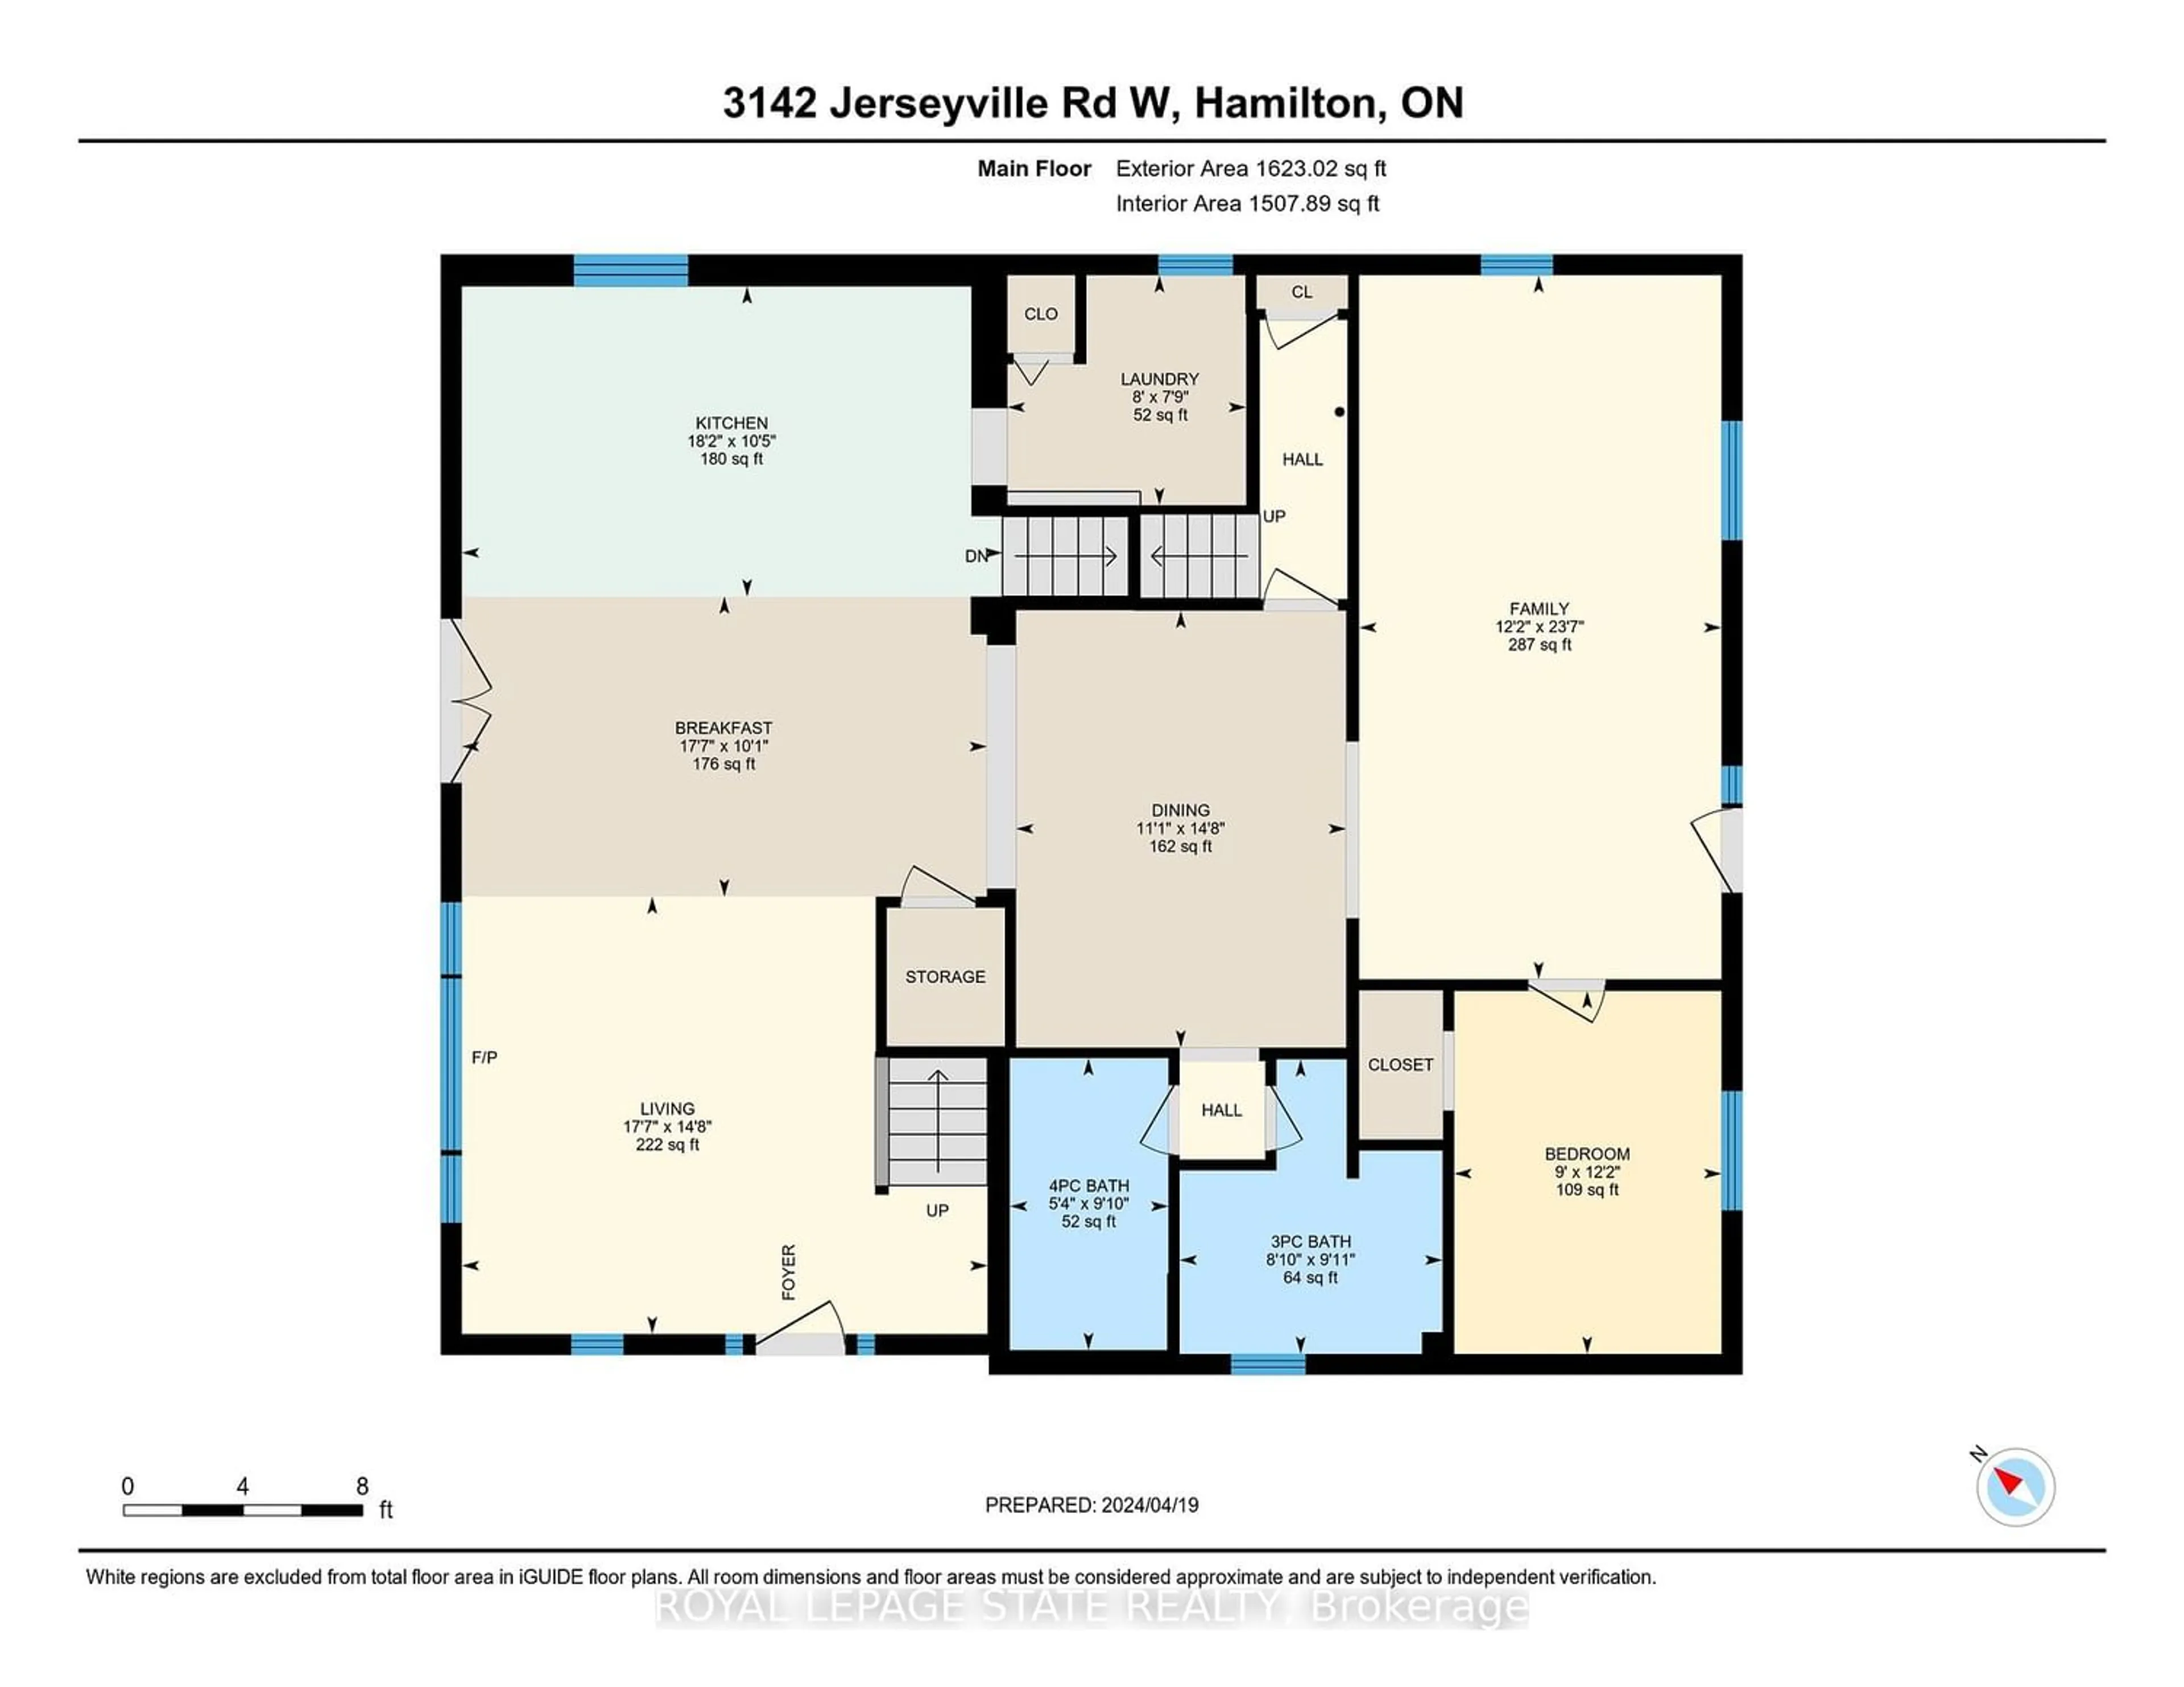 Floor plan for 3142 Jerseyville Rd, Hamilton Ontario N3T 5M1